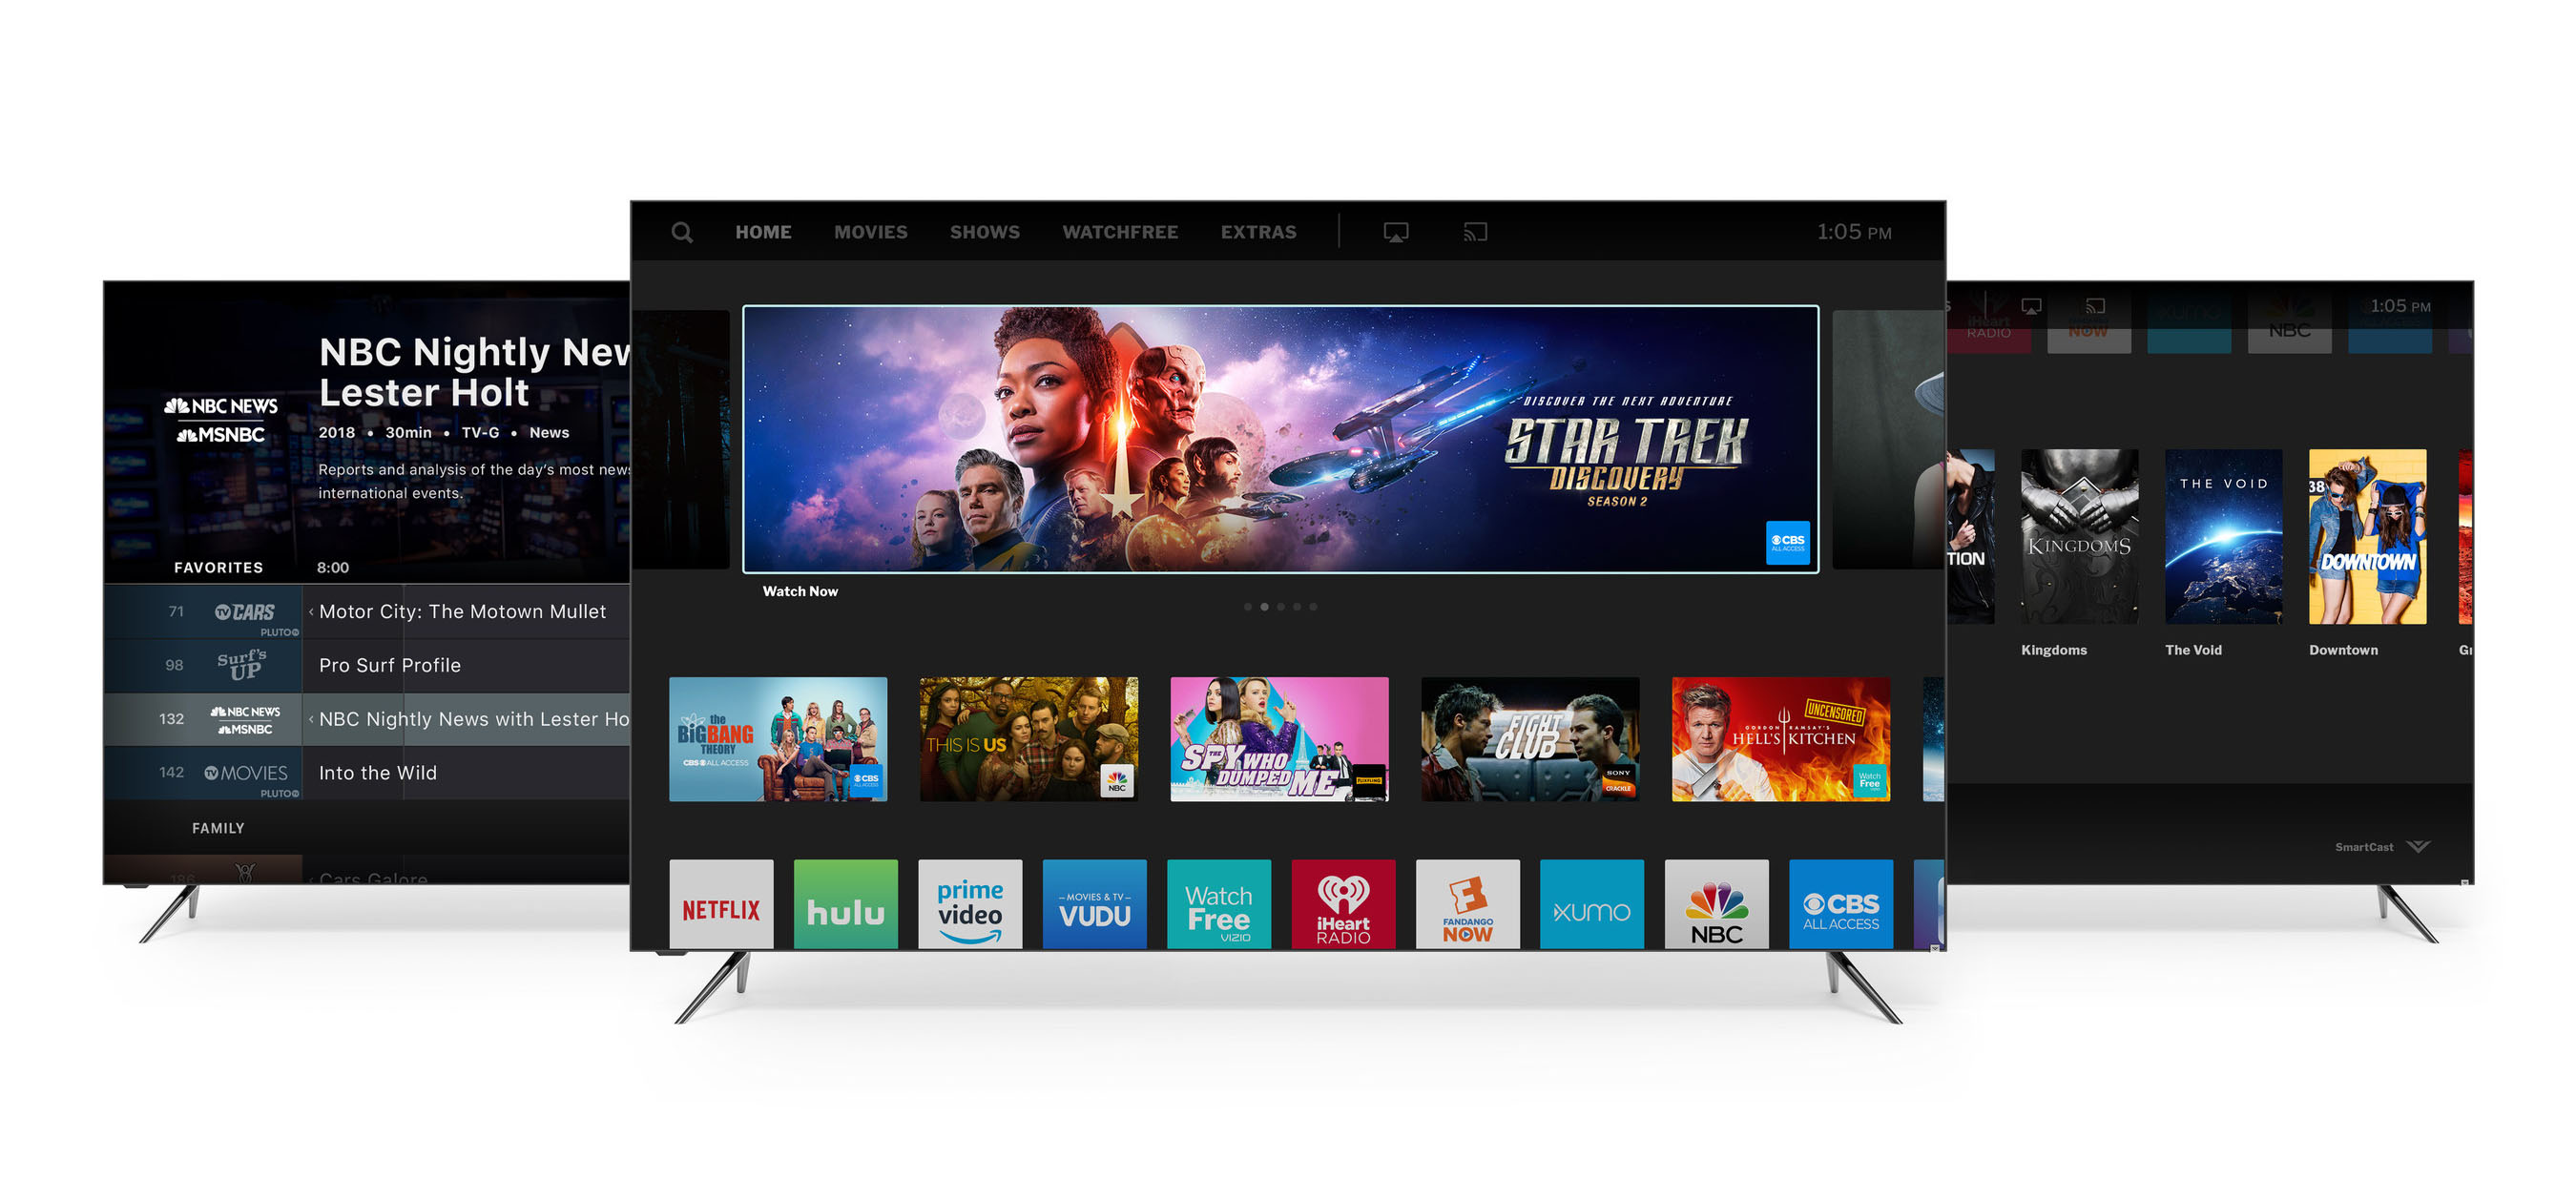 Bude Hulu Live pracovat na Vizio Smart TV?